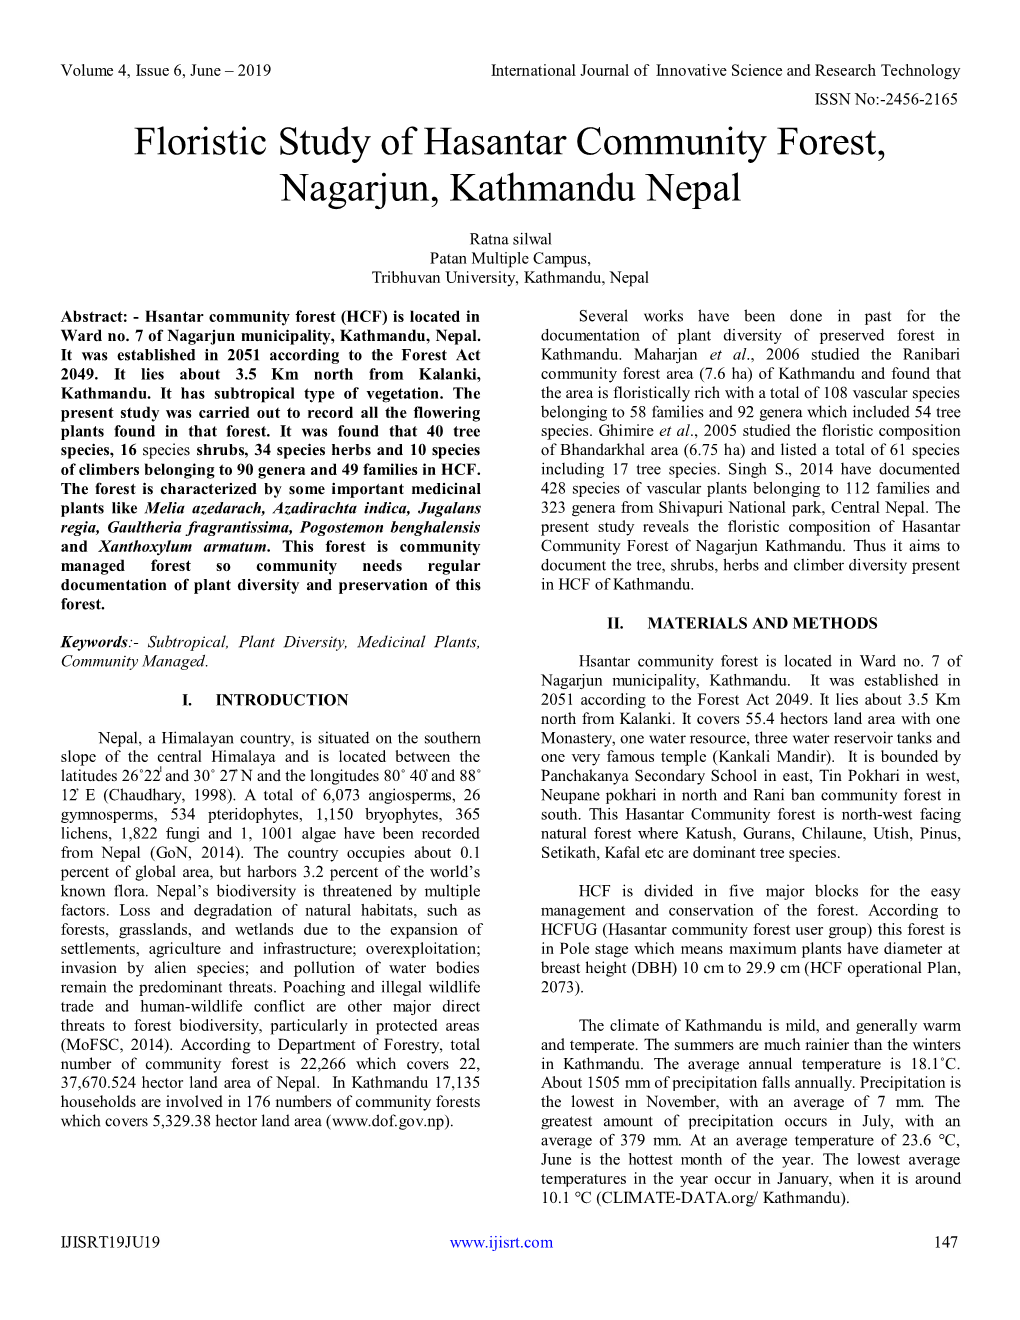 Floristic Study of Hasantar Community Forest, Nagarjun, Kathmandu Nepal